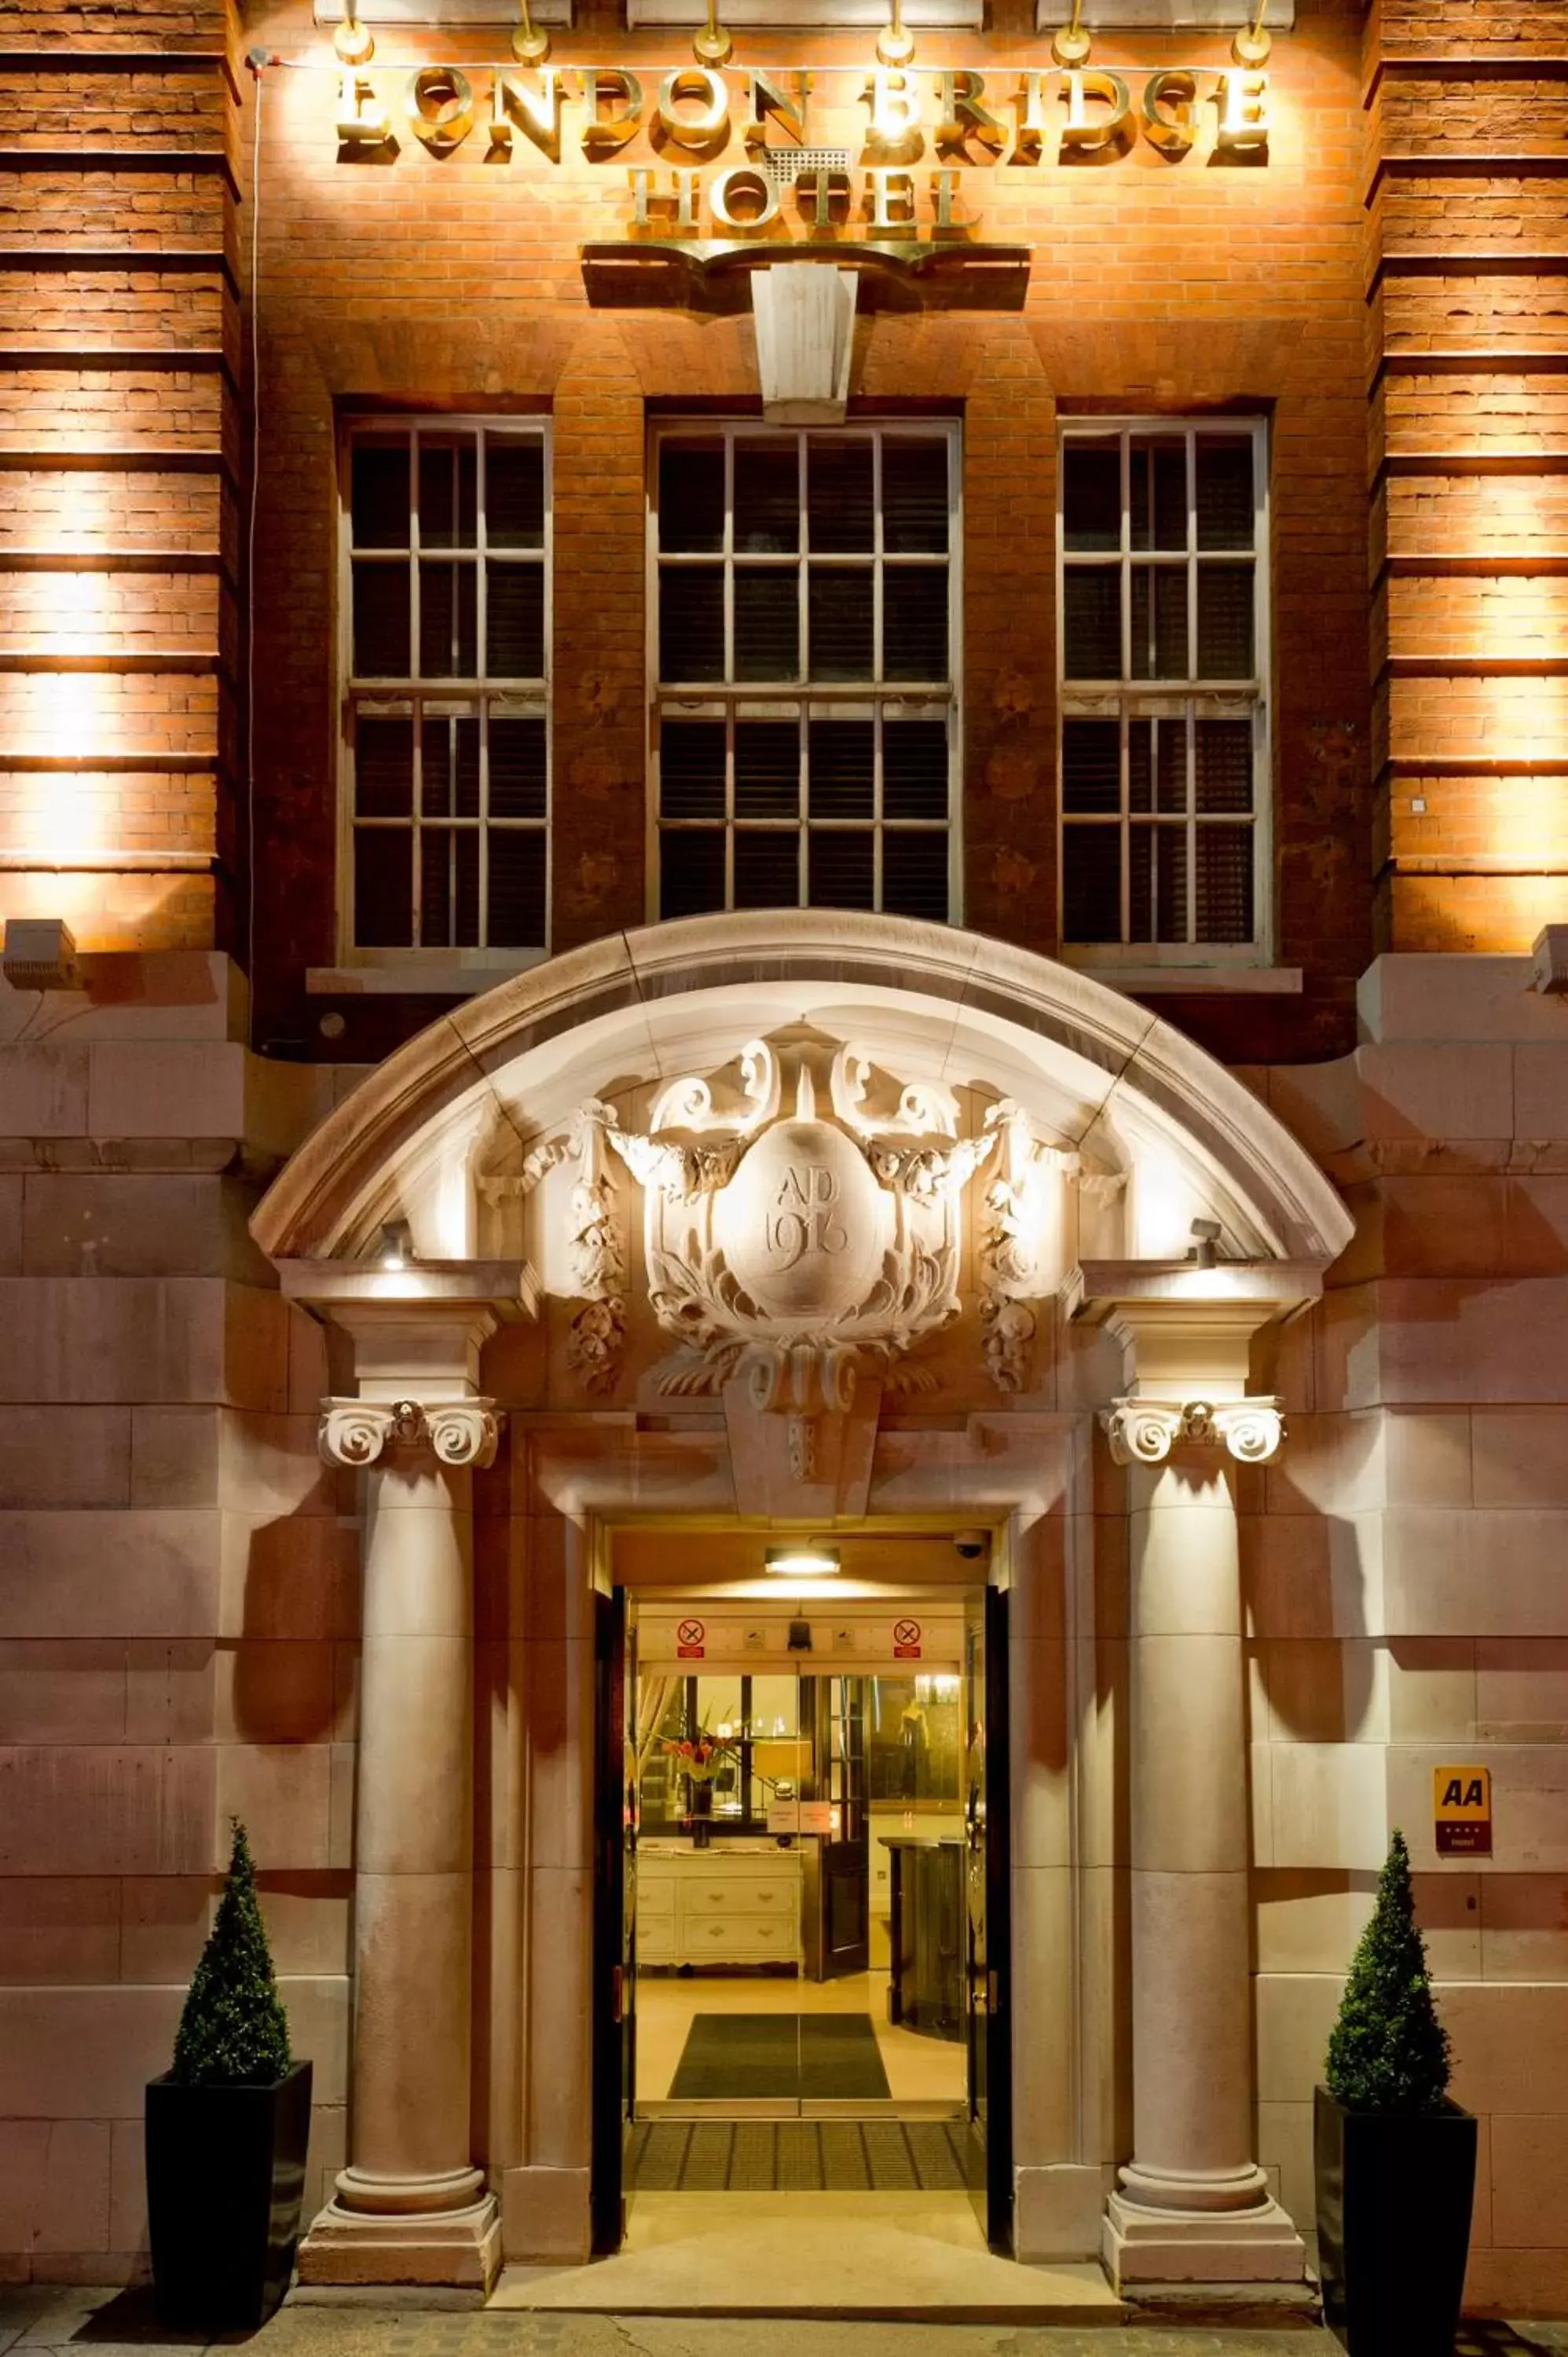 Facade/entrance in London Bridge Hotel 